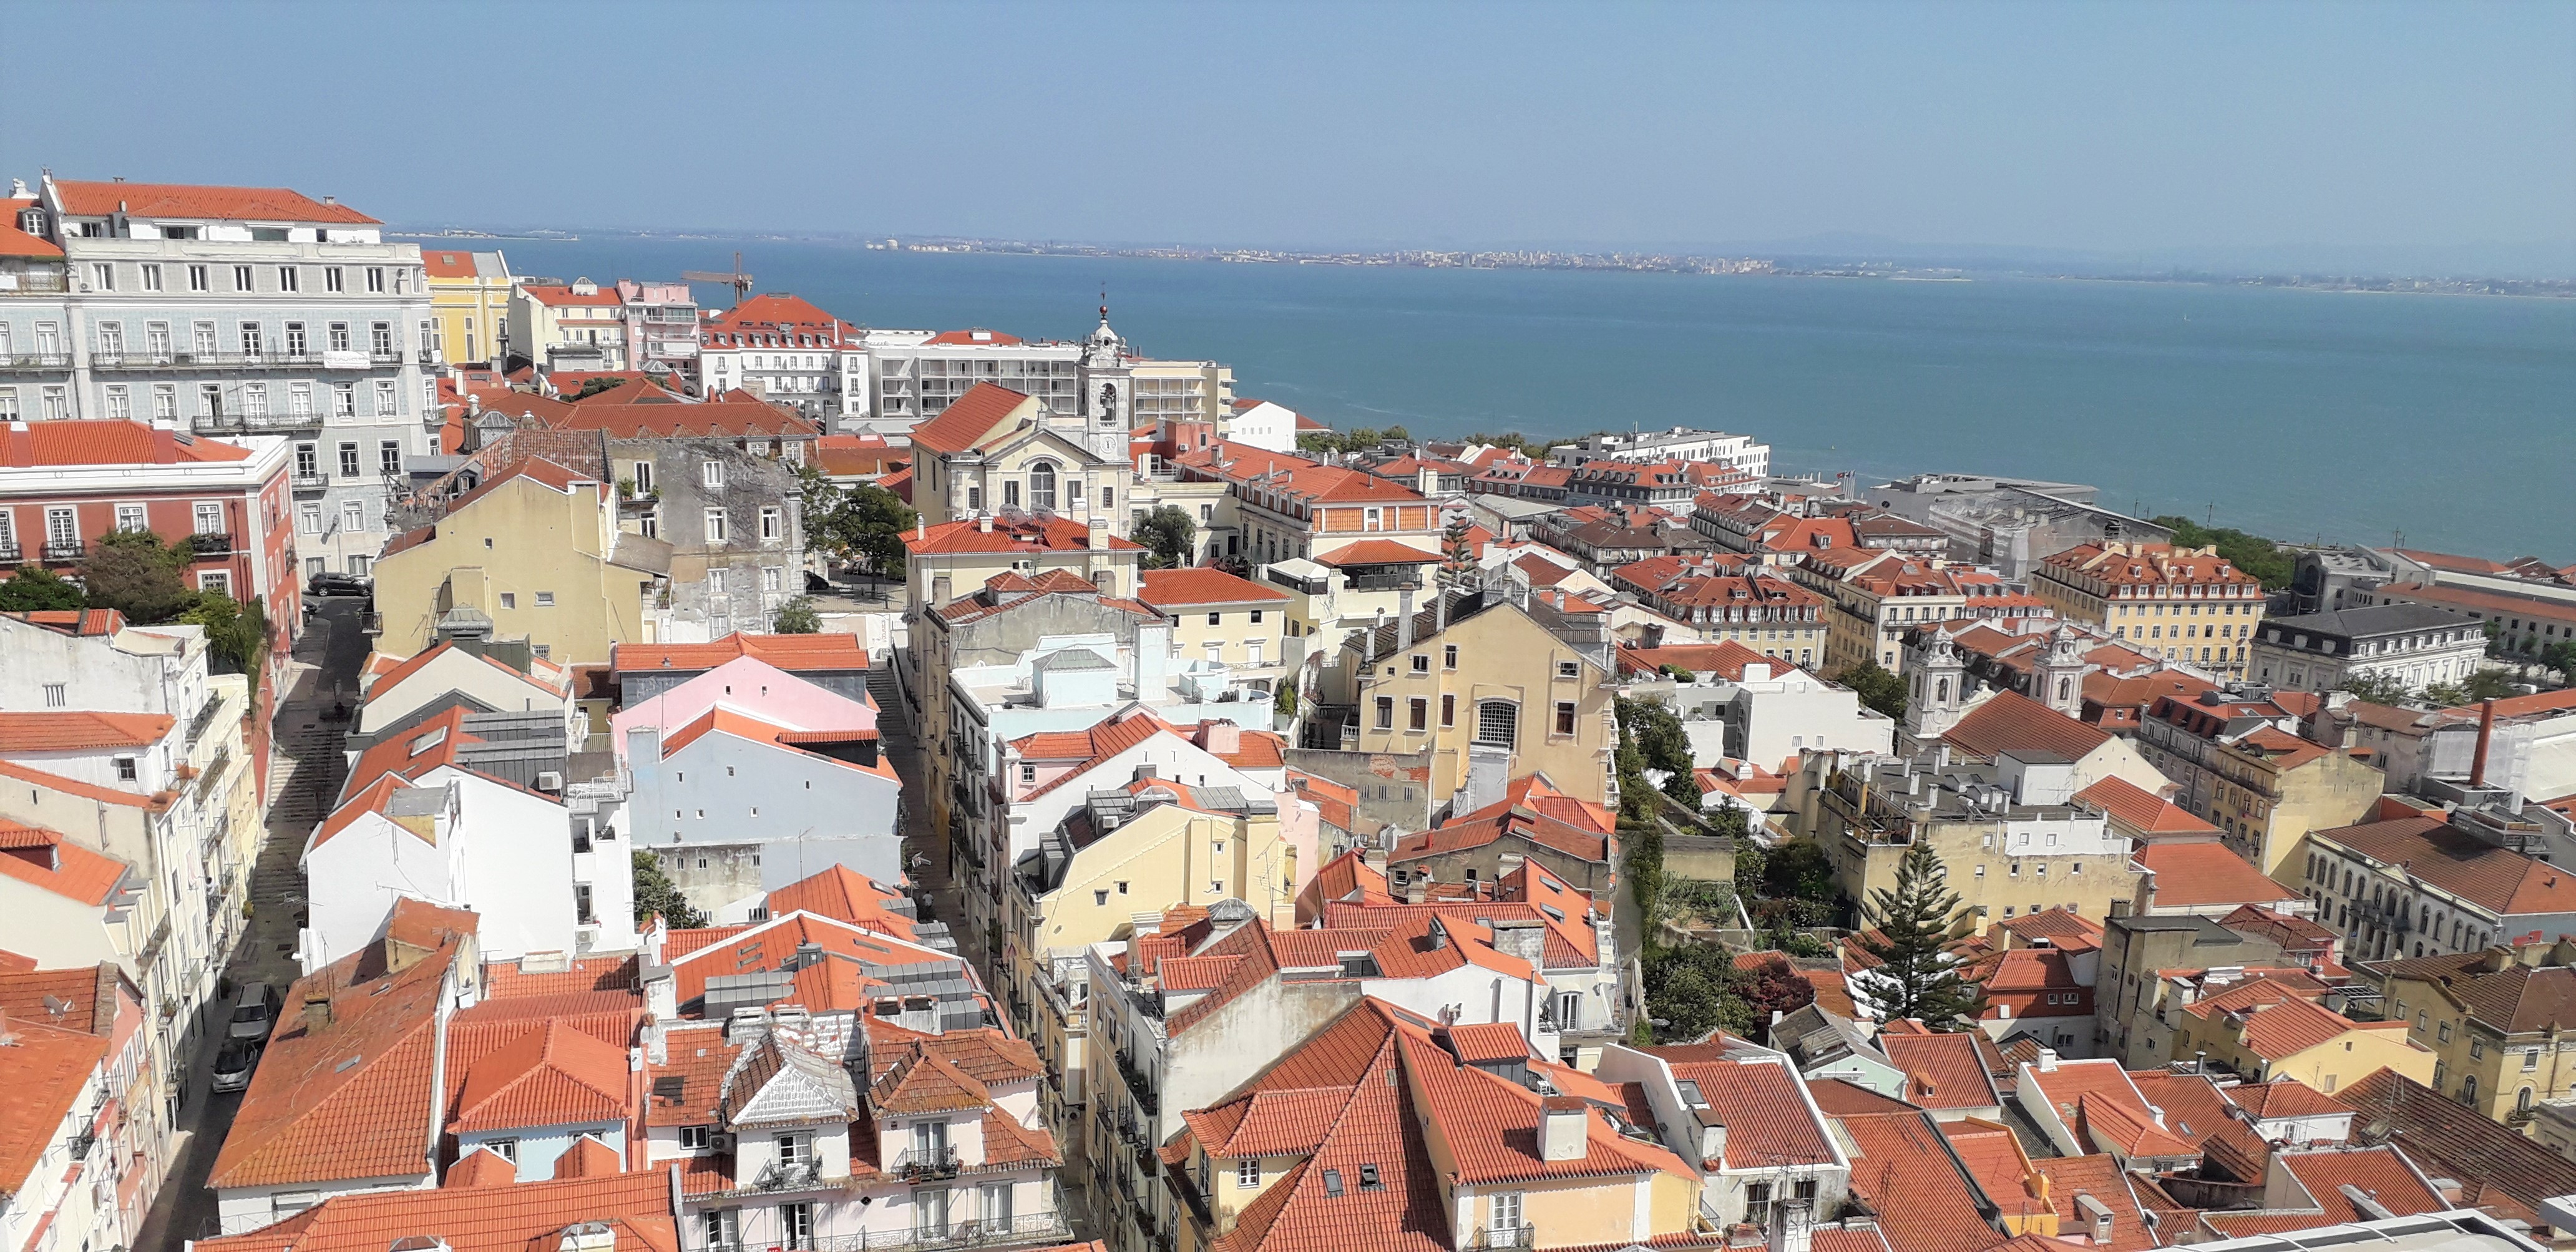 Vista de Lisboa e do Rio Tejo a partir do terraço do restaurante Suba